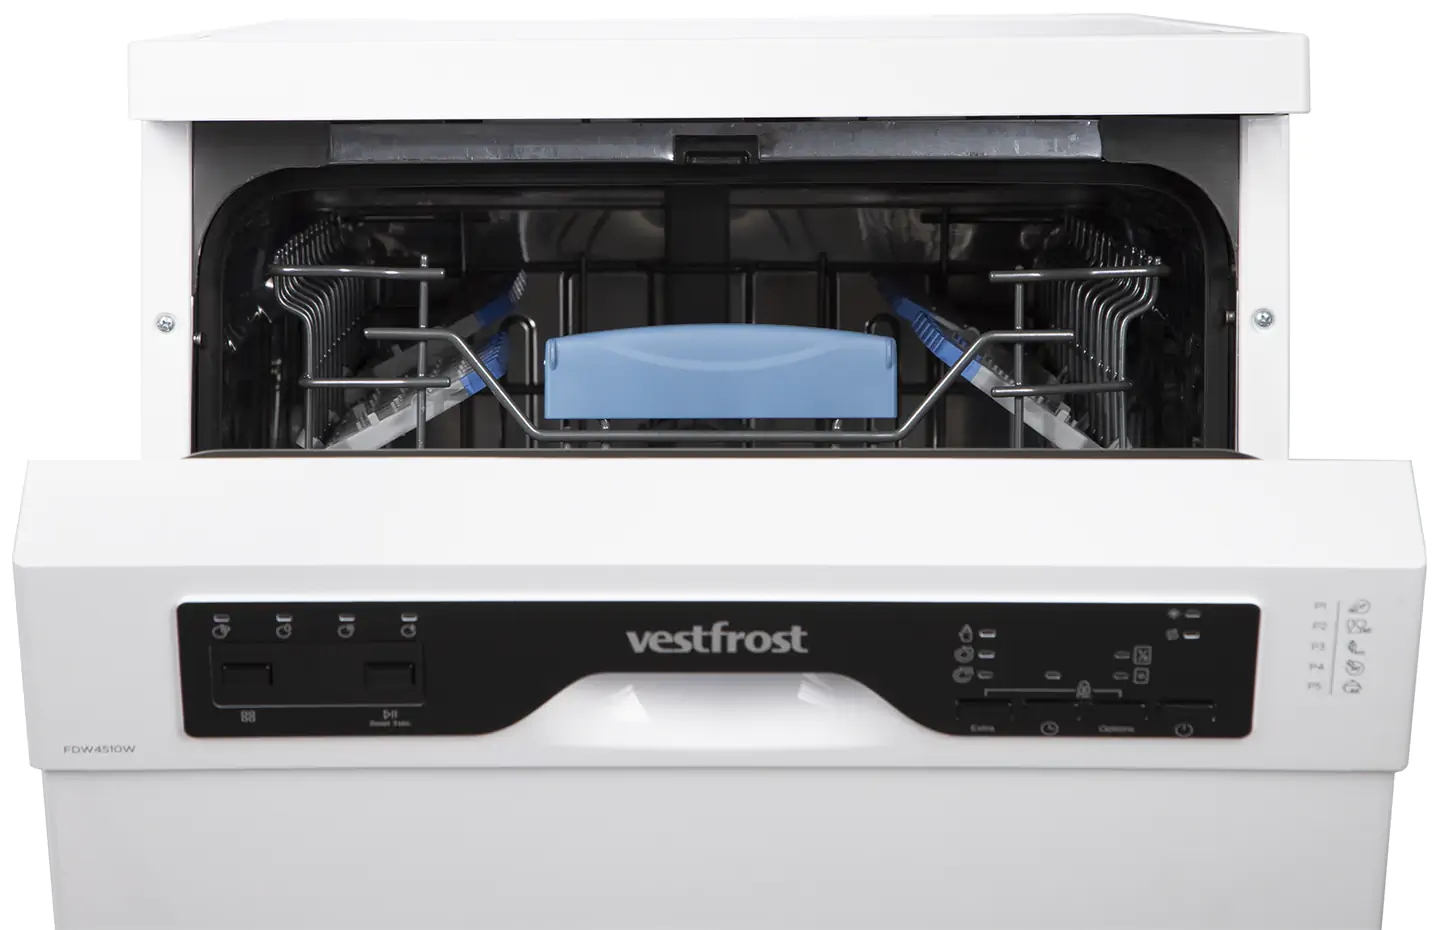 Посудомоечная машина Vestfrost FDW4510W обзор - фото 8